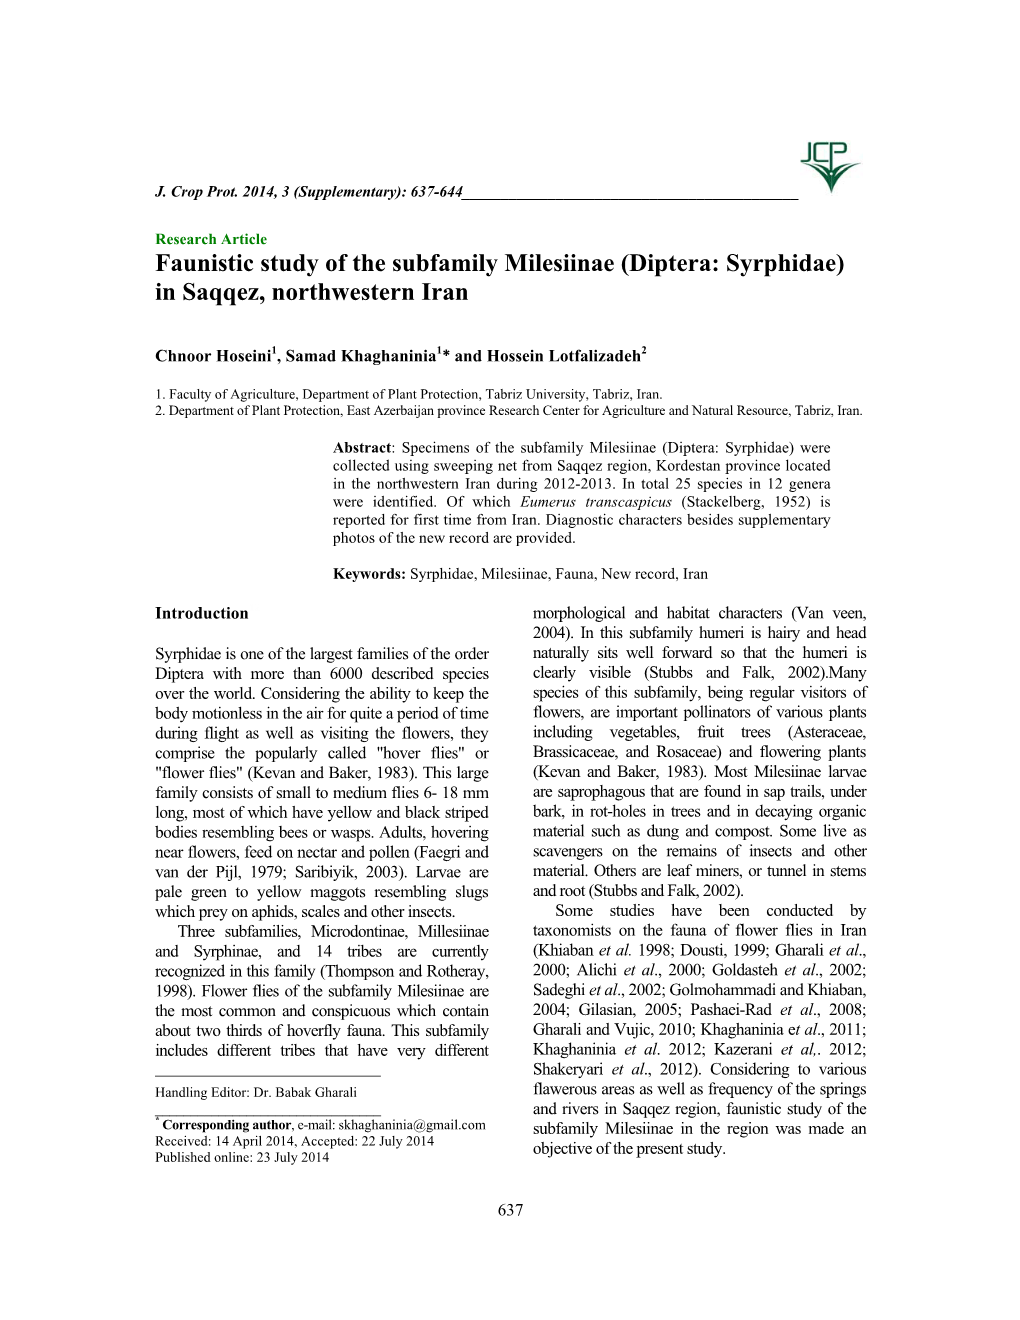 Faunistic Study of the Subfamily Milesiinae (Diptera: Syrphidae) in Saqqez, Northwestern Iran